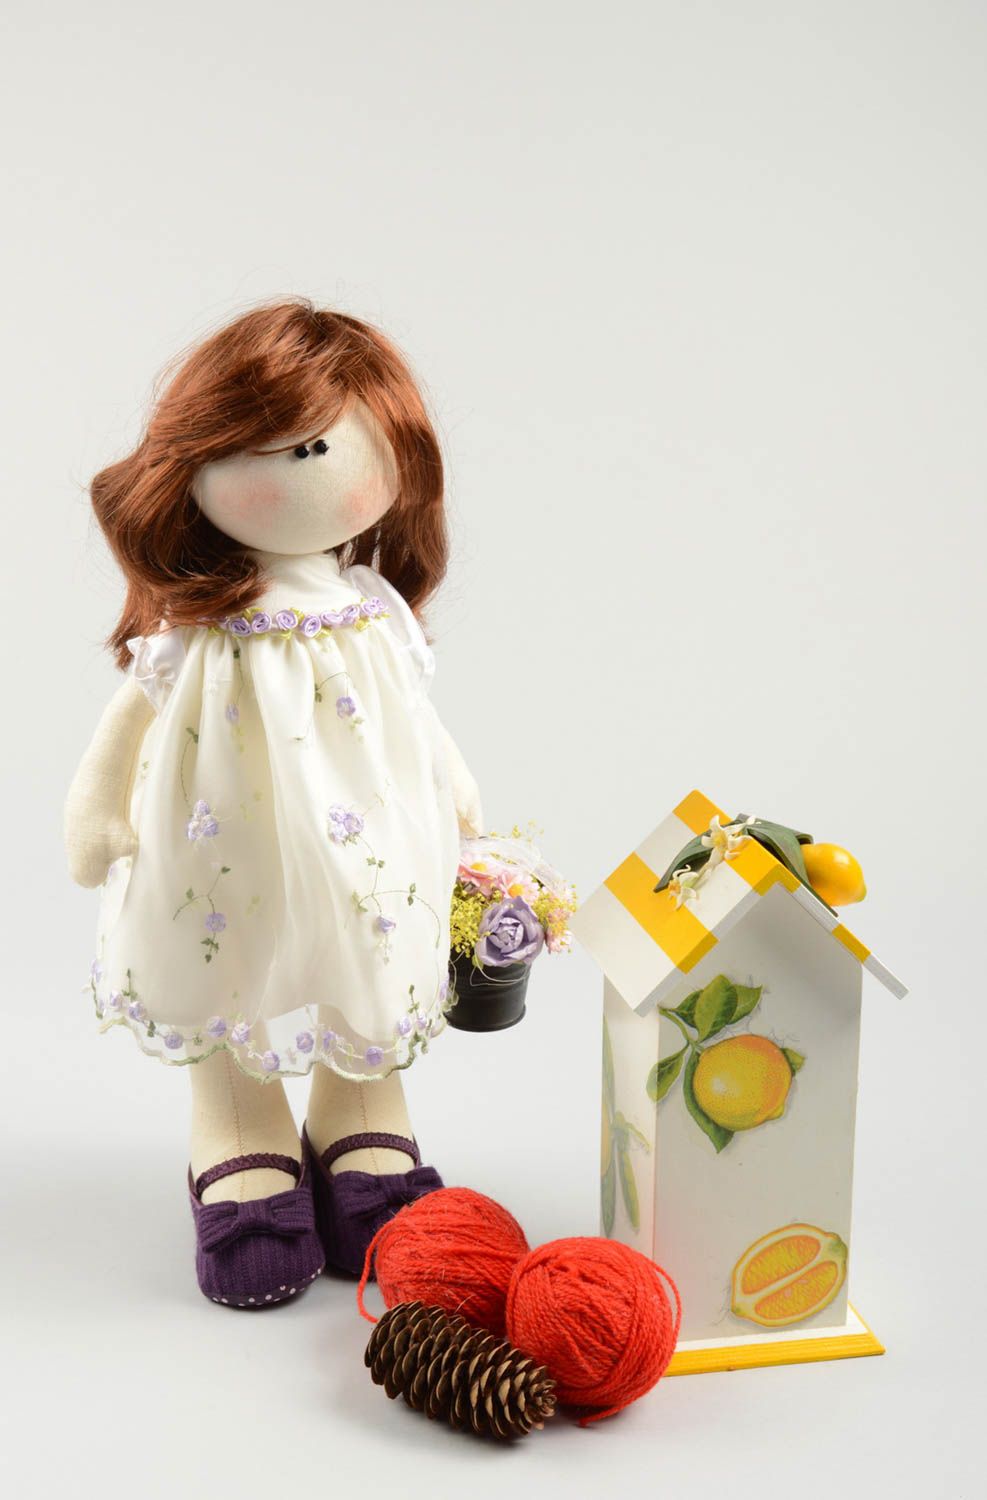 Beautiful handmade rag doll best toys for kids room decor ideas gift ideas photo 5